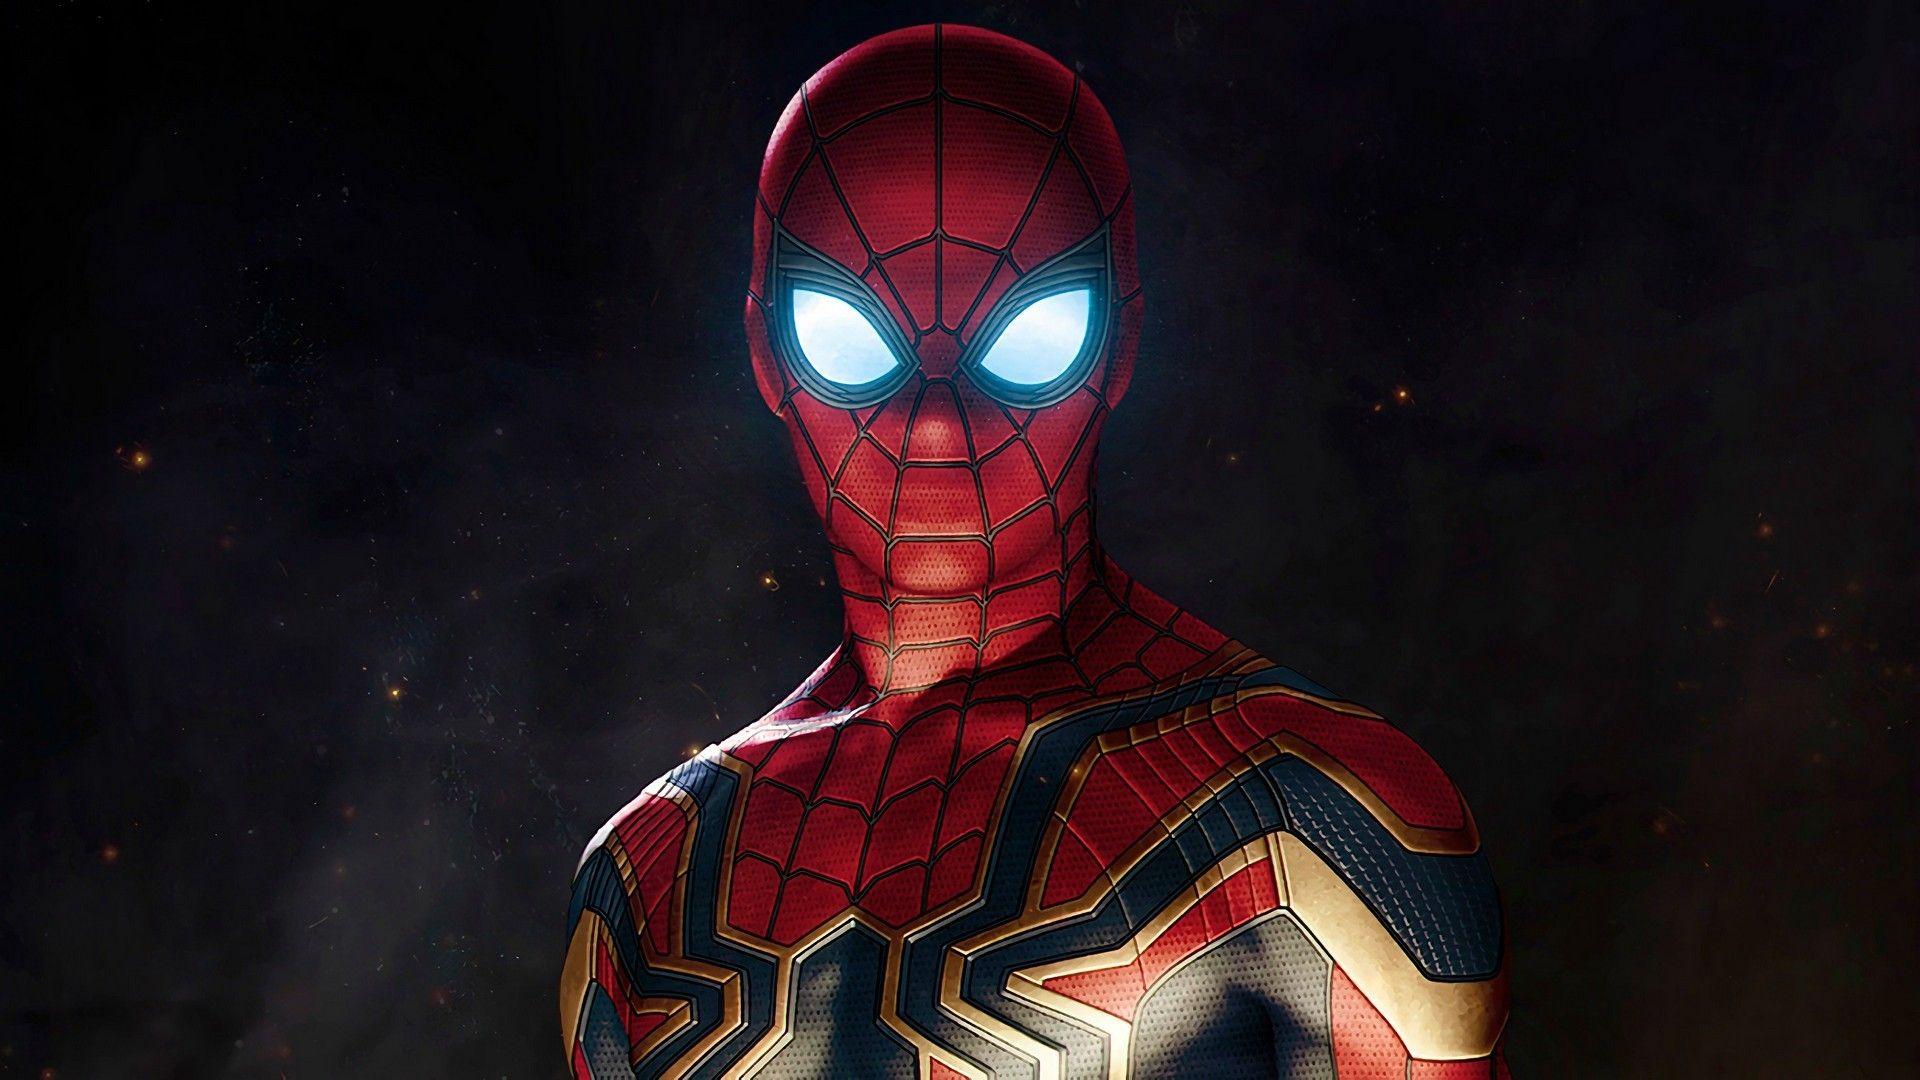 Spiderman Avengers Infinity War Wallpaper. Best HD